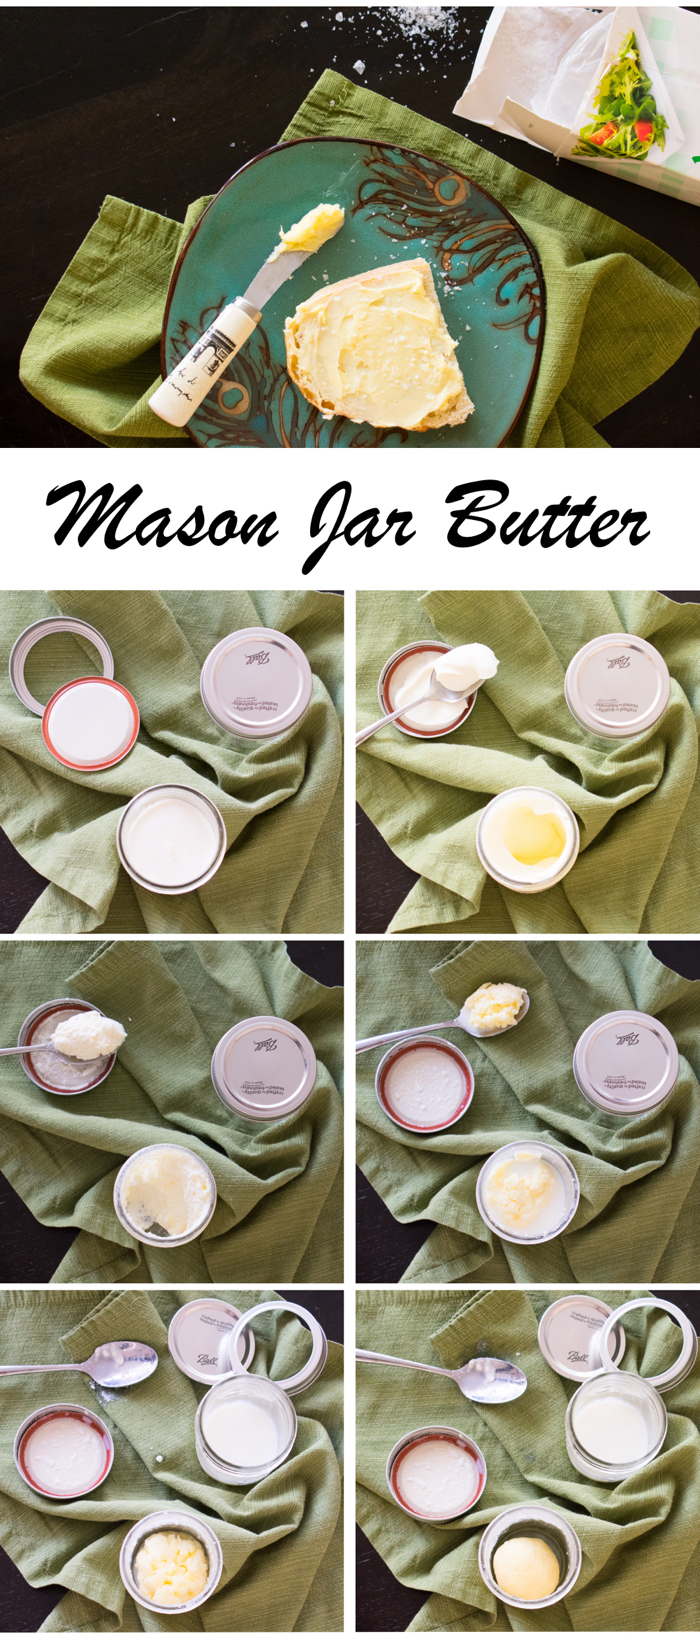 Mason Jar Butter tutorial from ChefSarahElizabeth.com